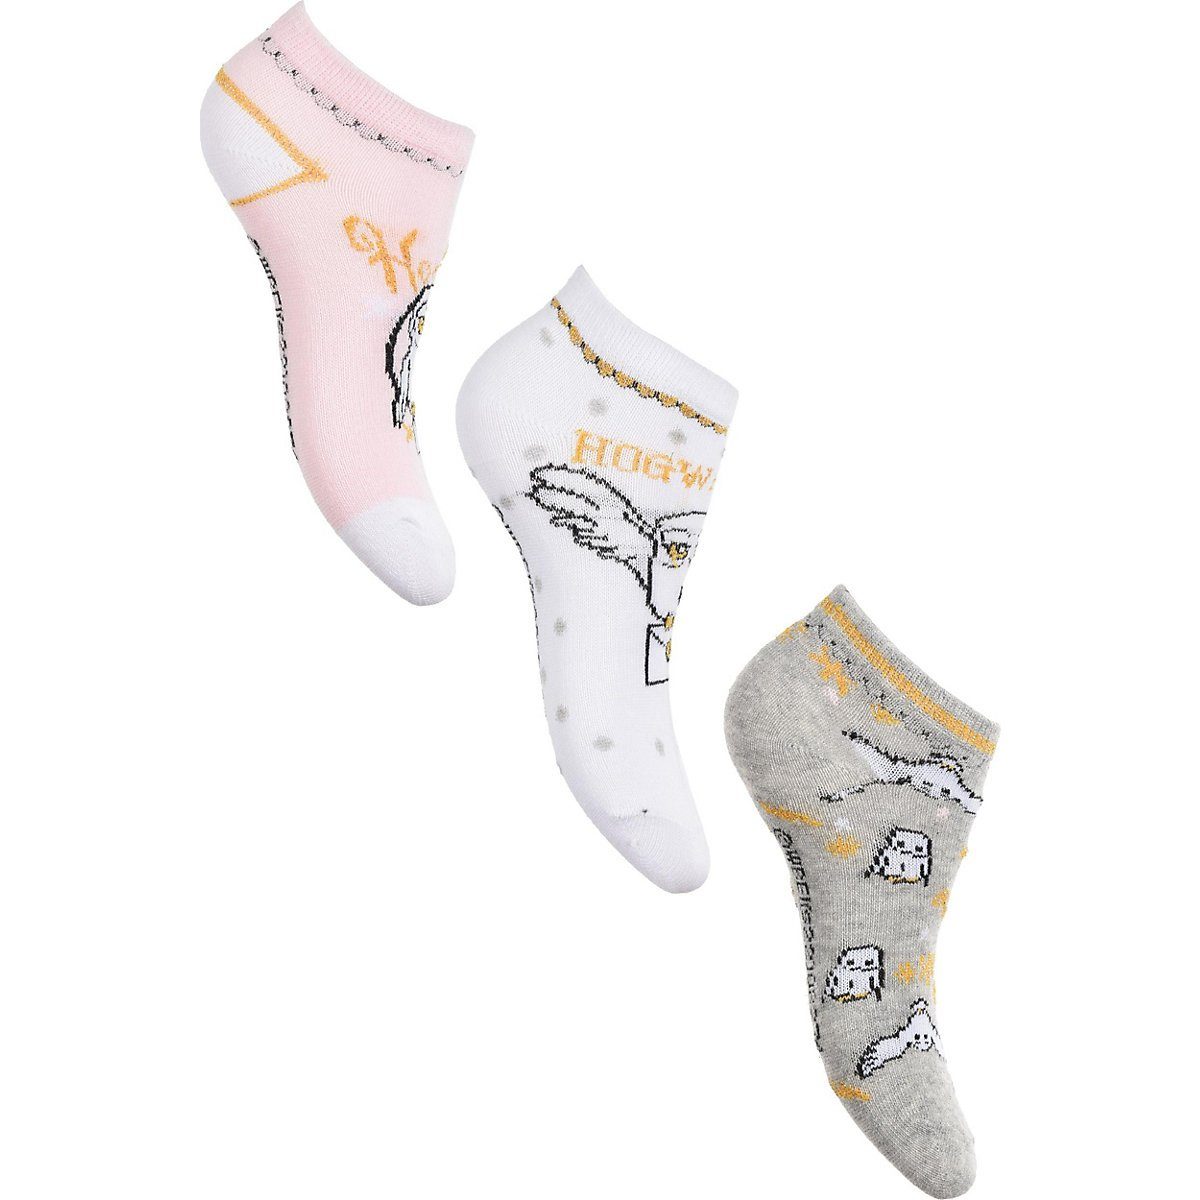 Wäsche/Bademode Socken Harry Potter Sneakersocken Harry Potter Sneakersocken für Mädchen, Zauberer